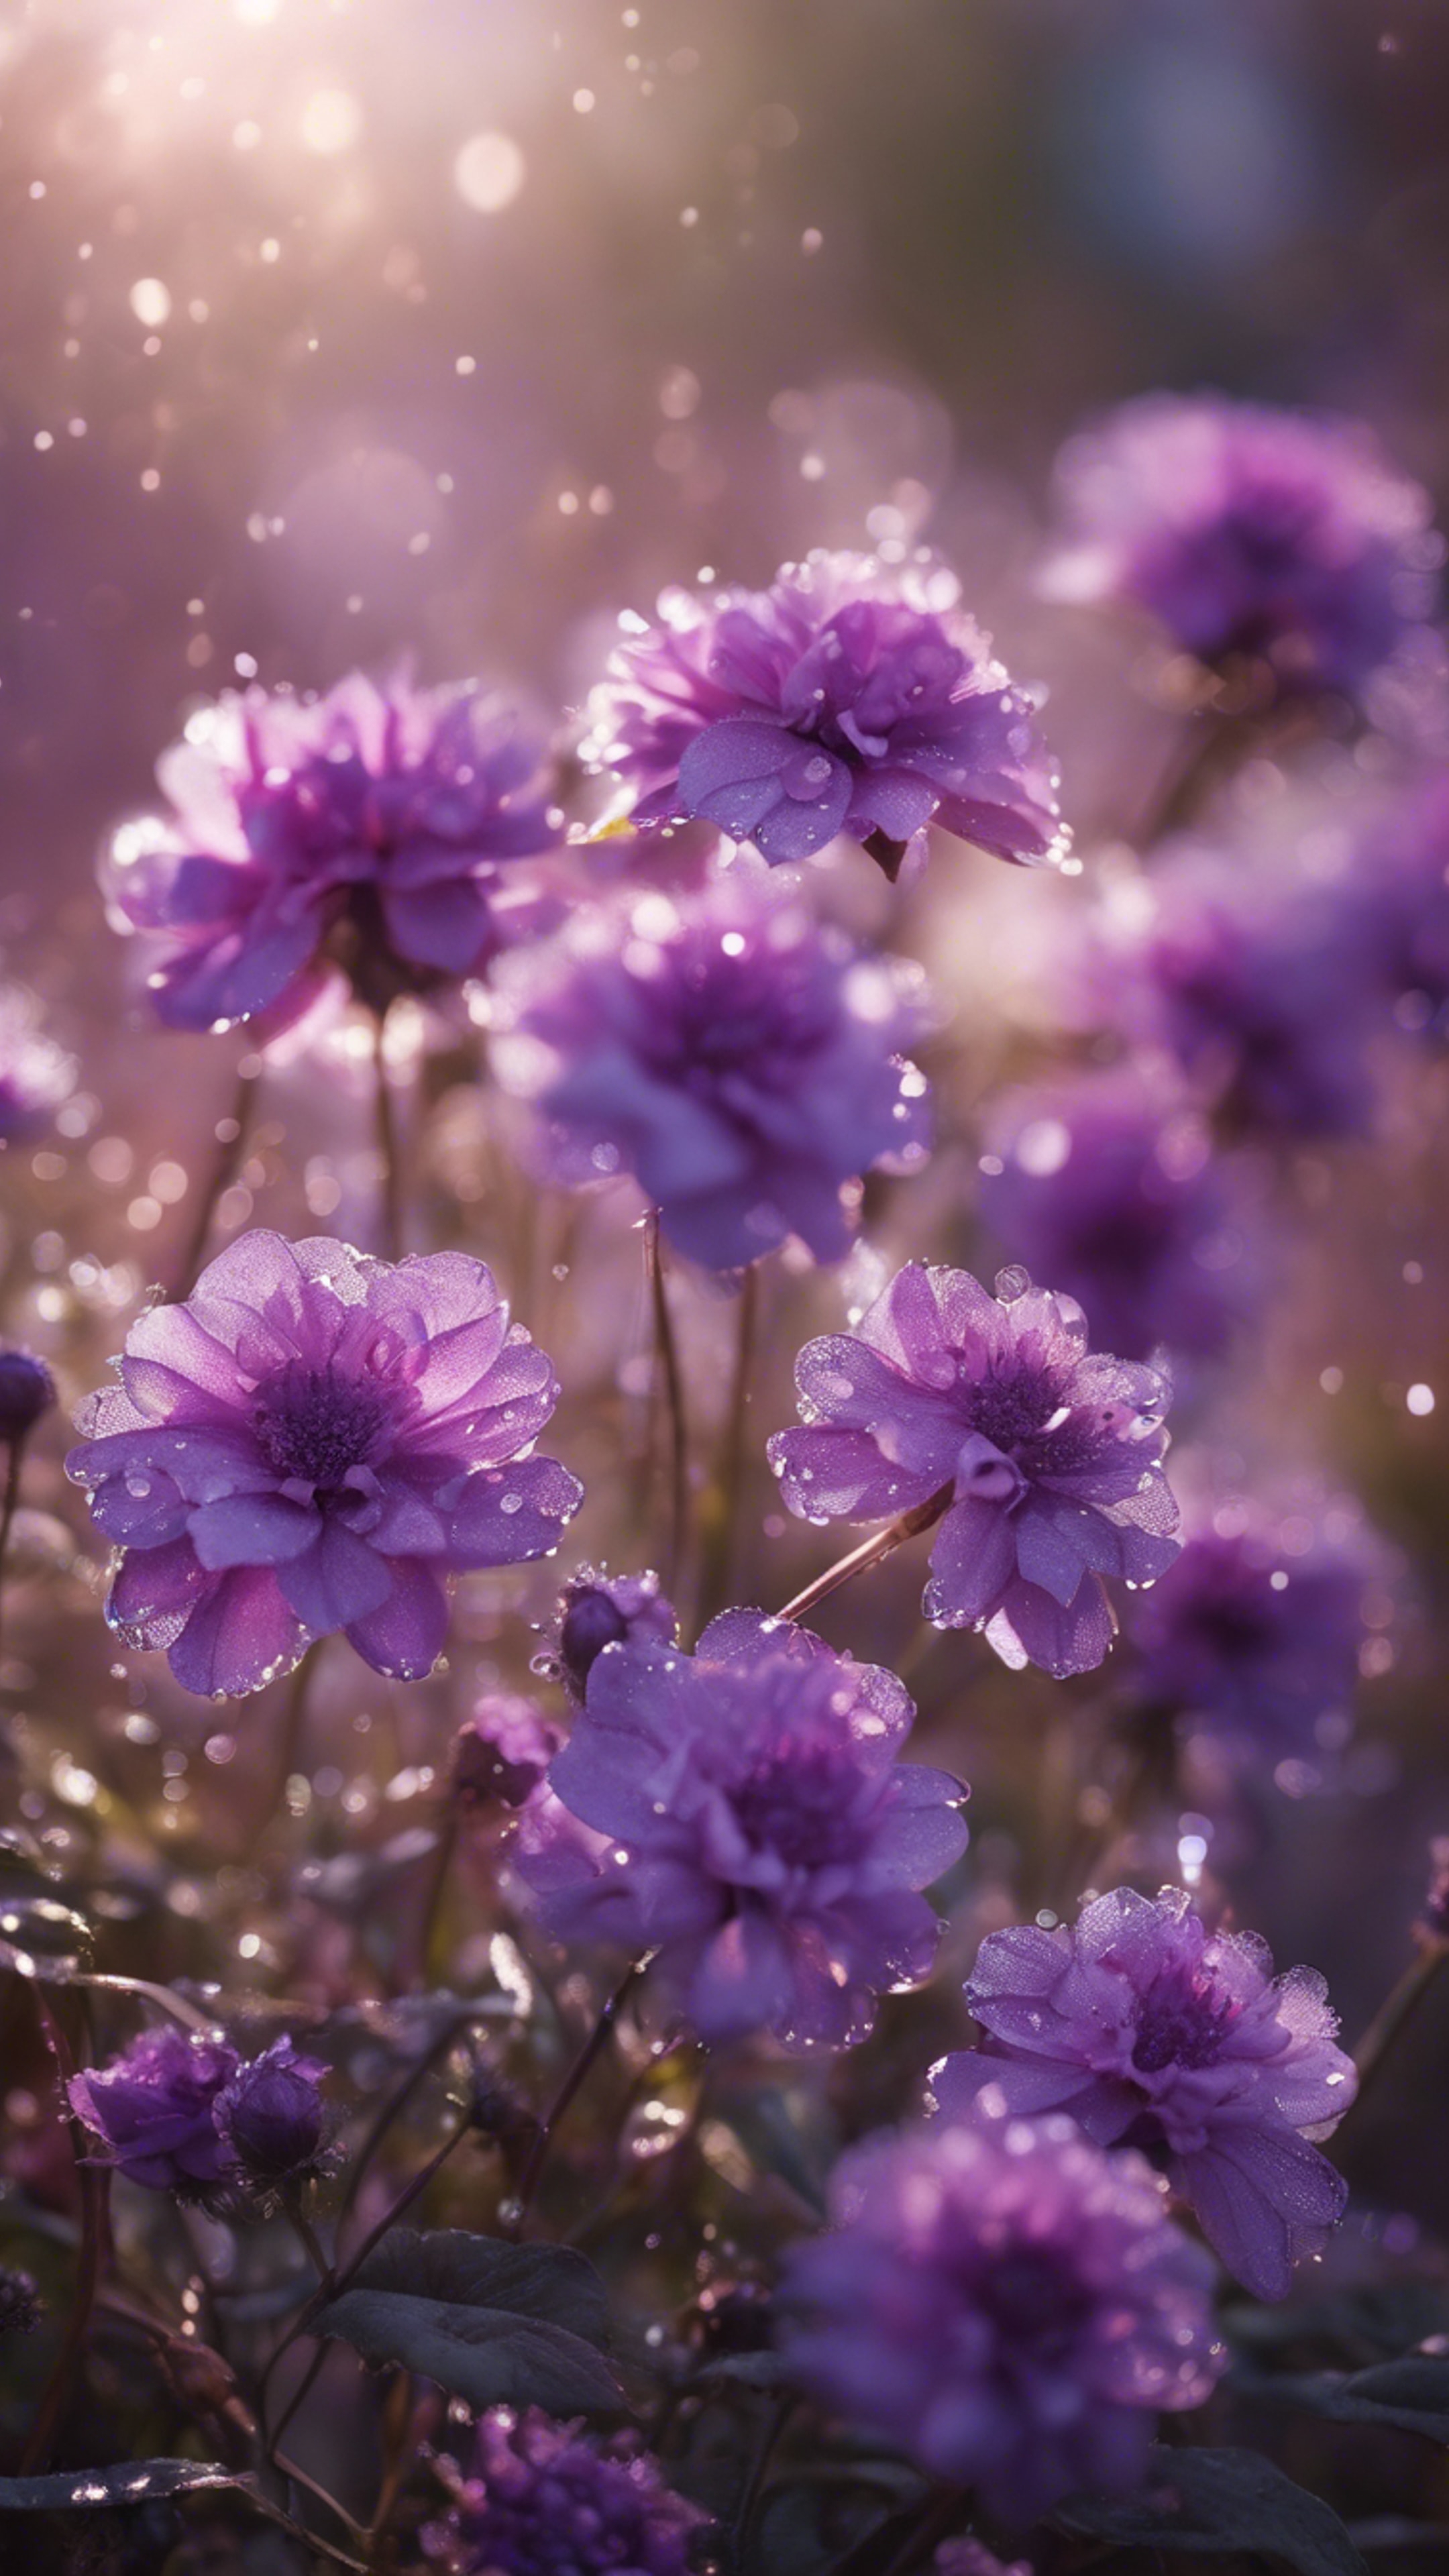 An impressive collage of purple flowers in full bloom, highlighted by sparkling morning dew. duvar kağıdı[23d1df20d4e341739cf3]